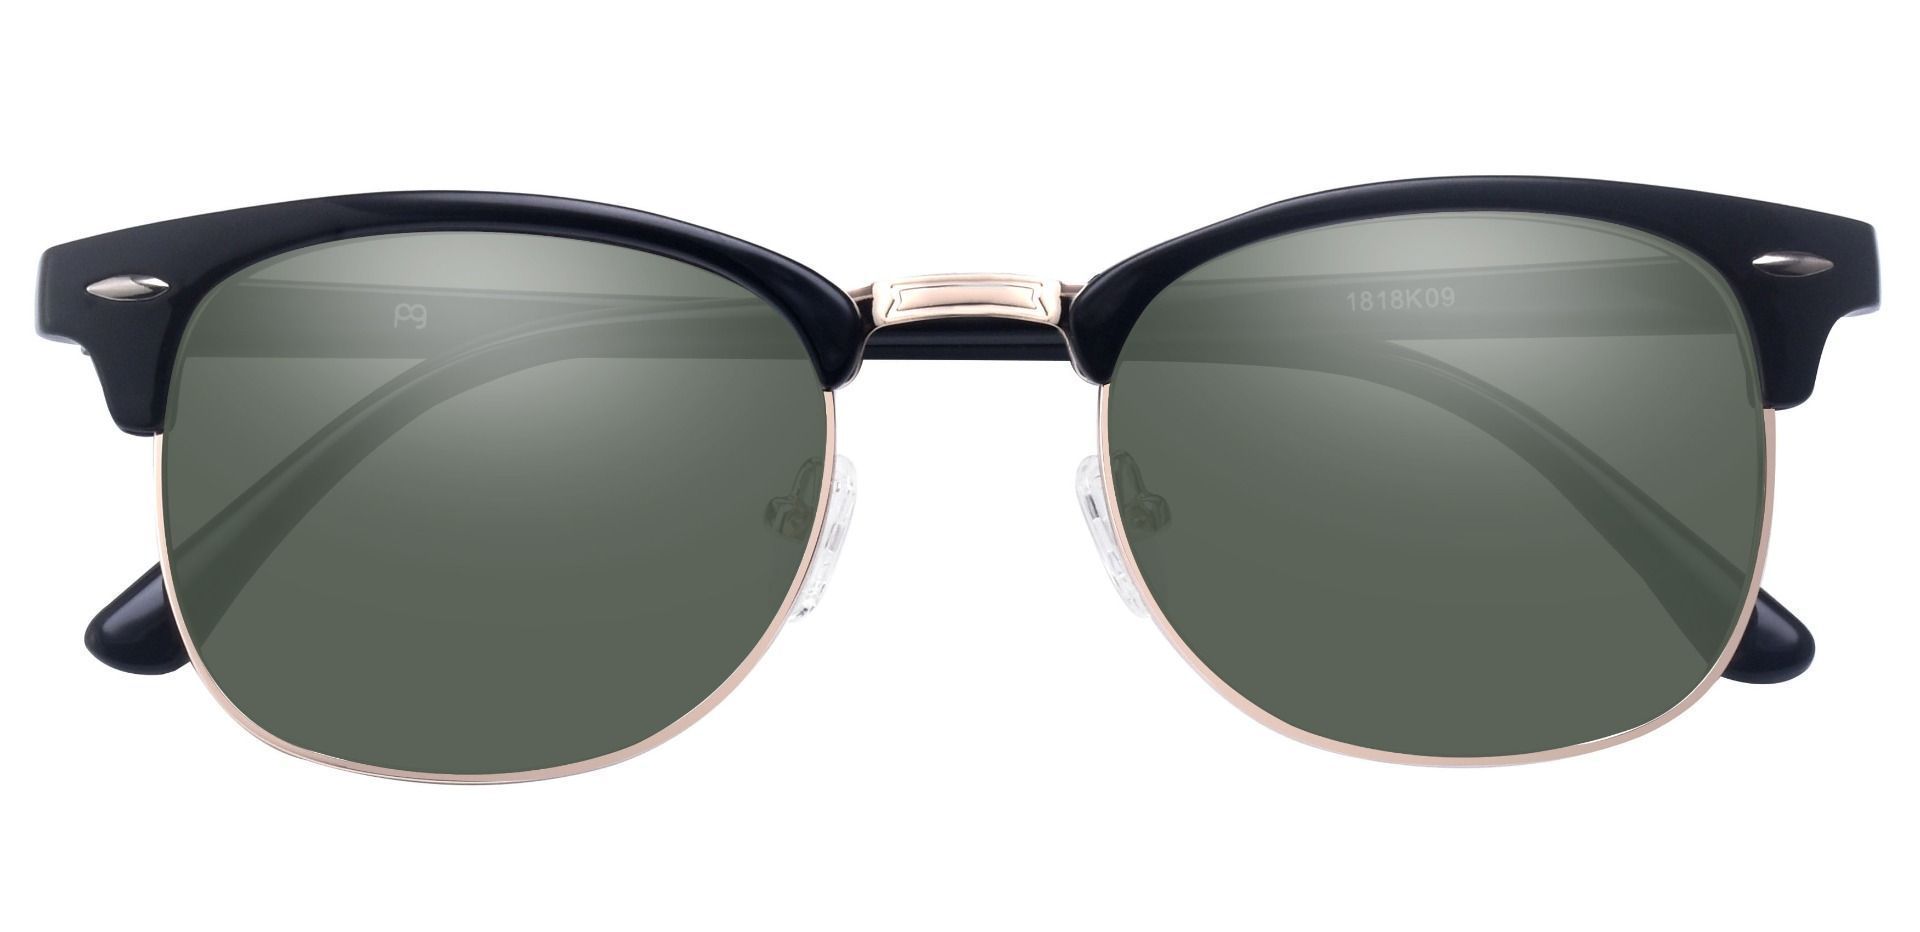 Salvatore Browline Prescription Sunglasses - Black Frame With Green Lenses